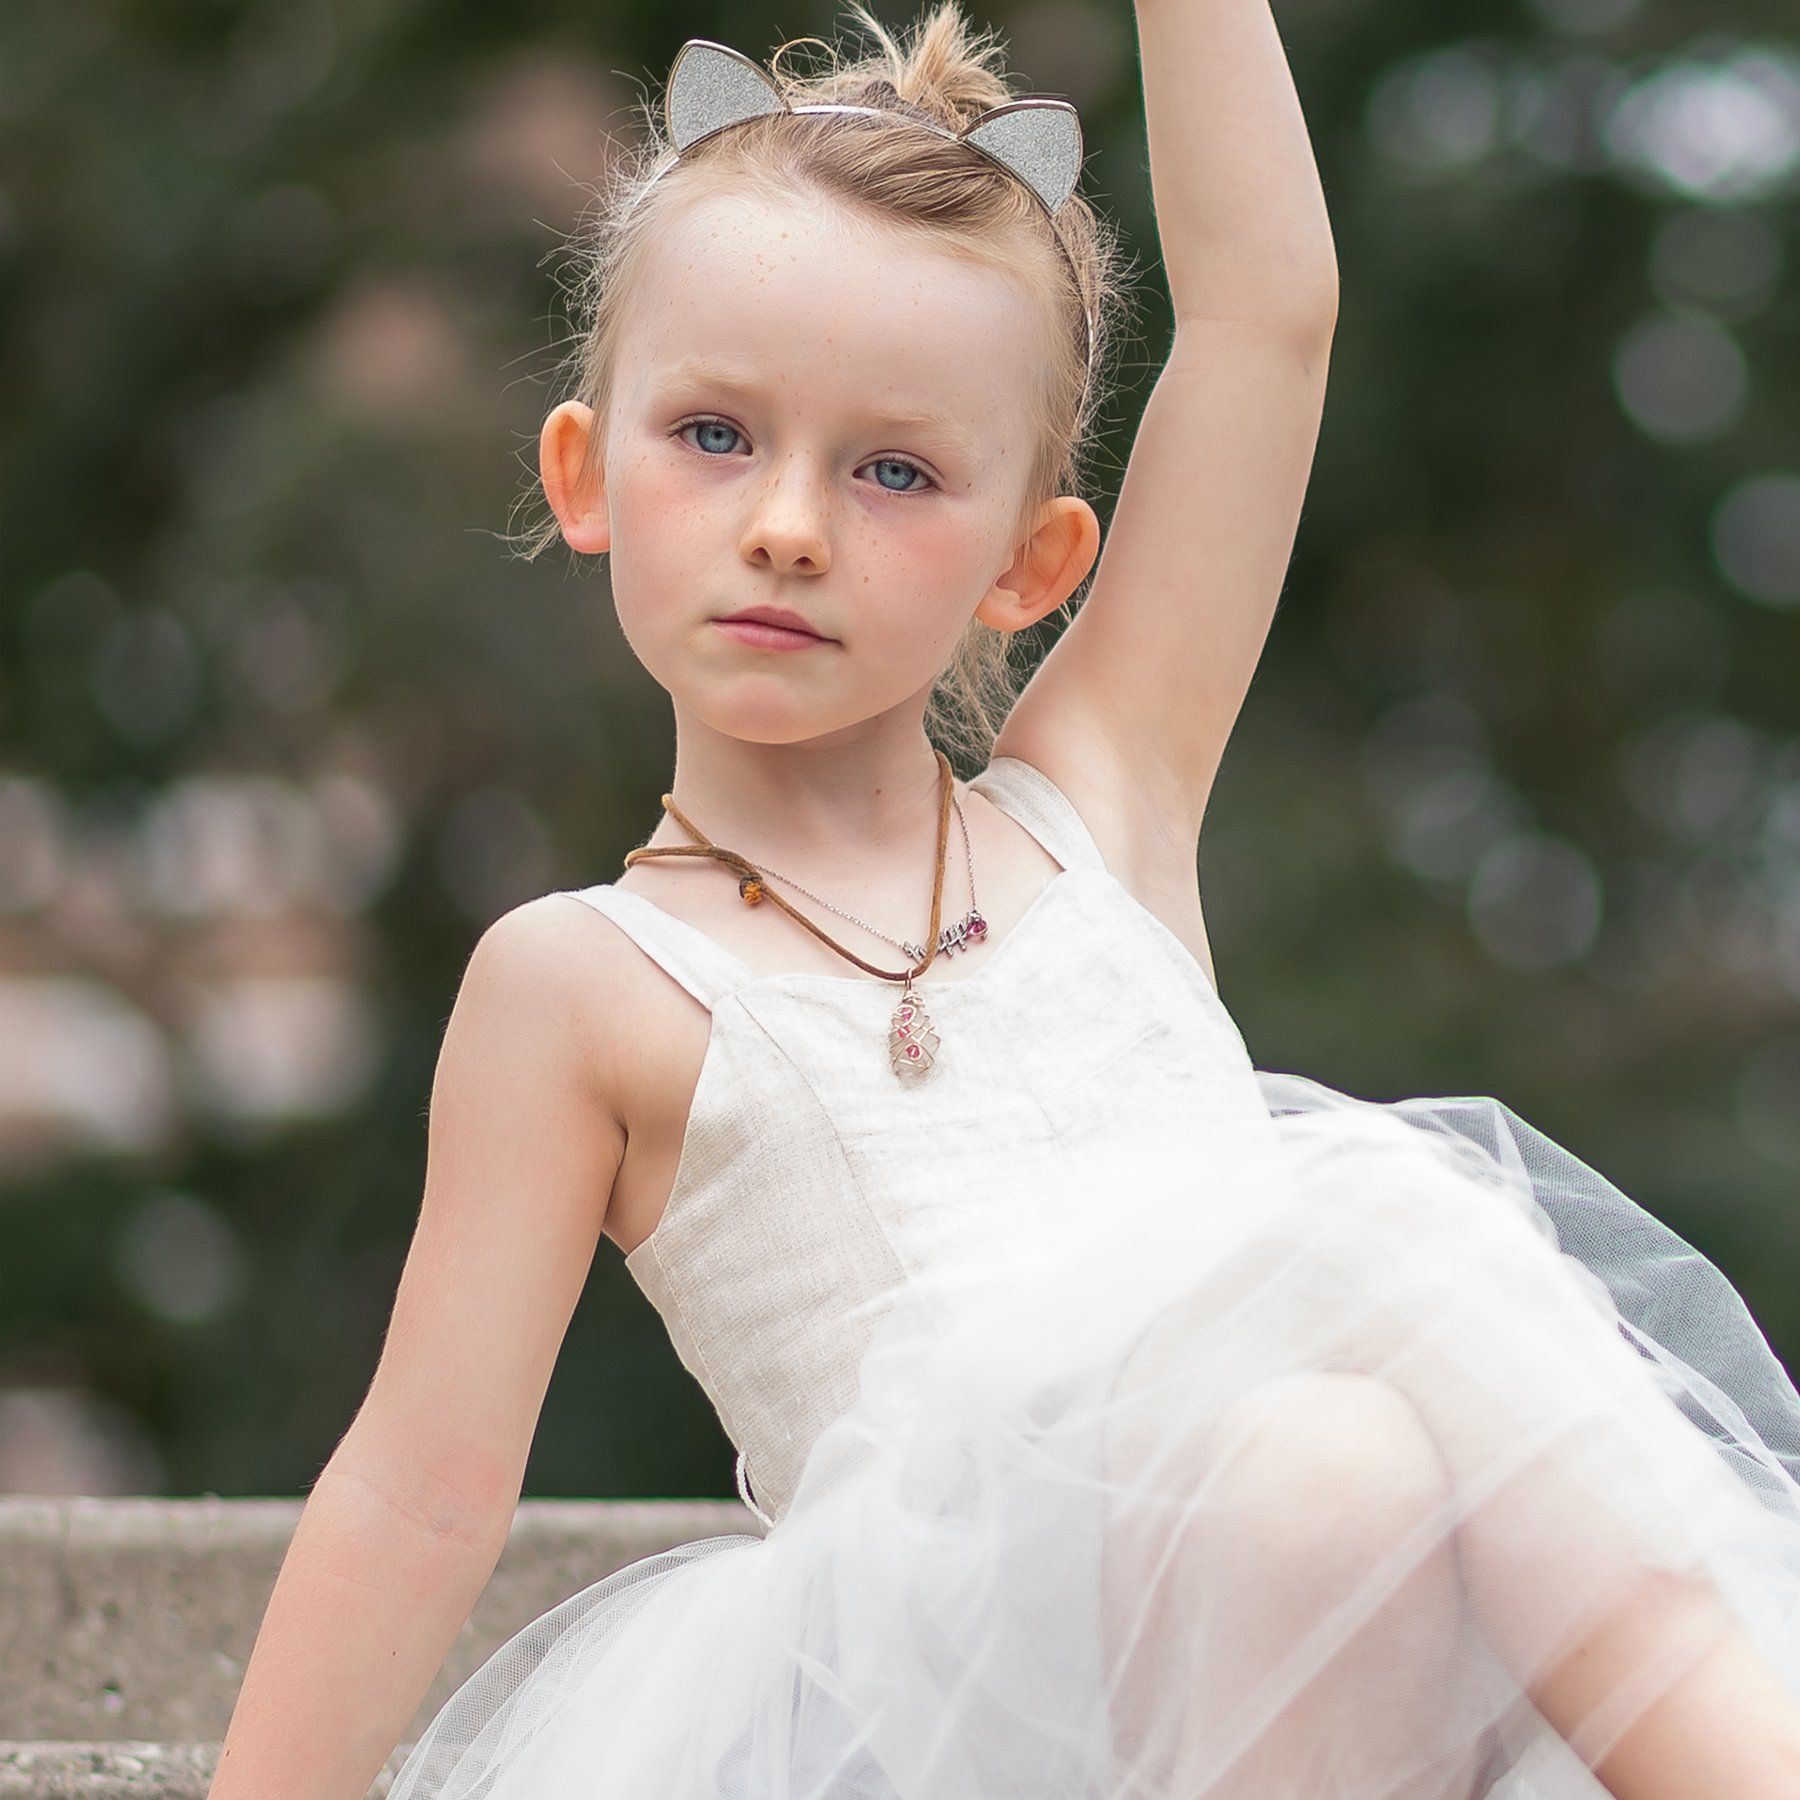 Ballerina | Child photography | Stacey Naglie Toronto